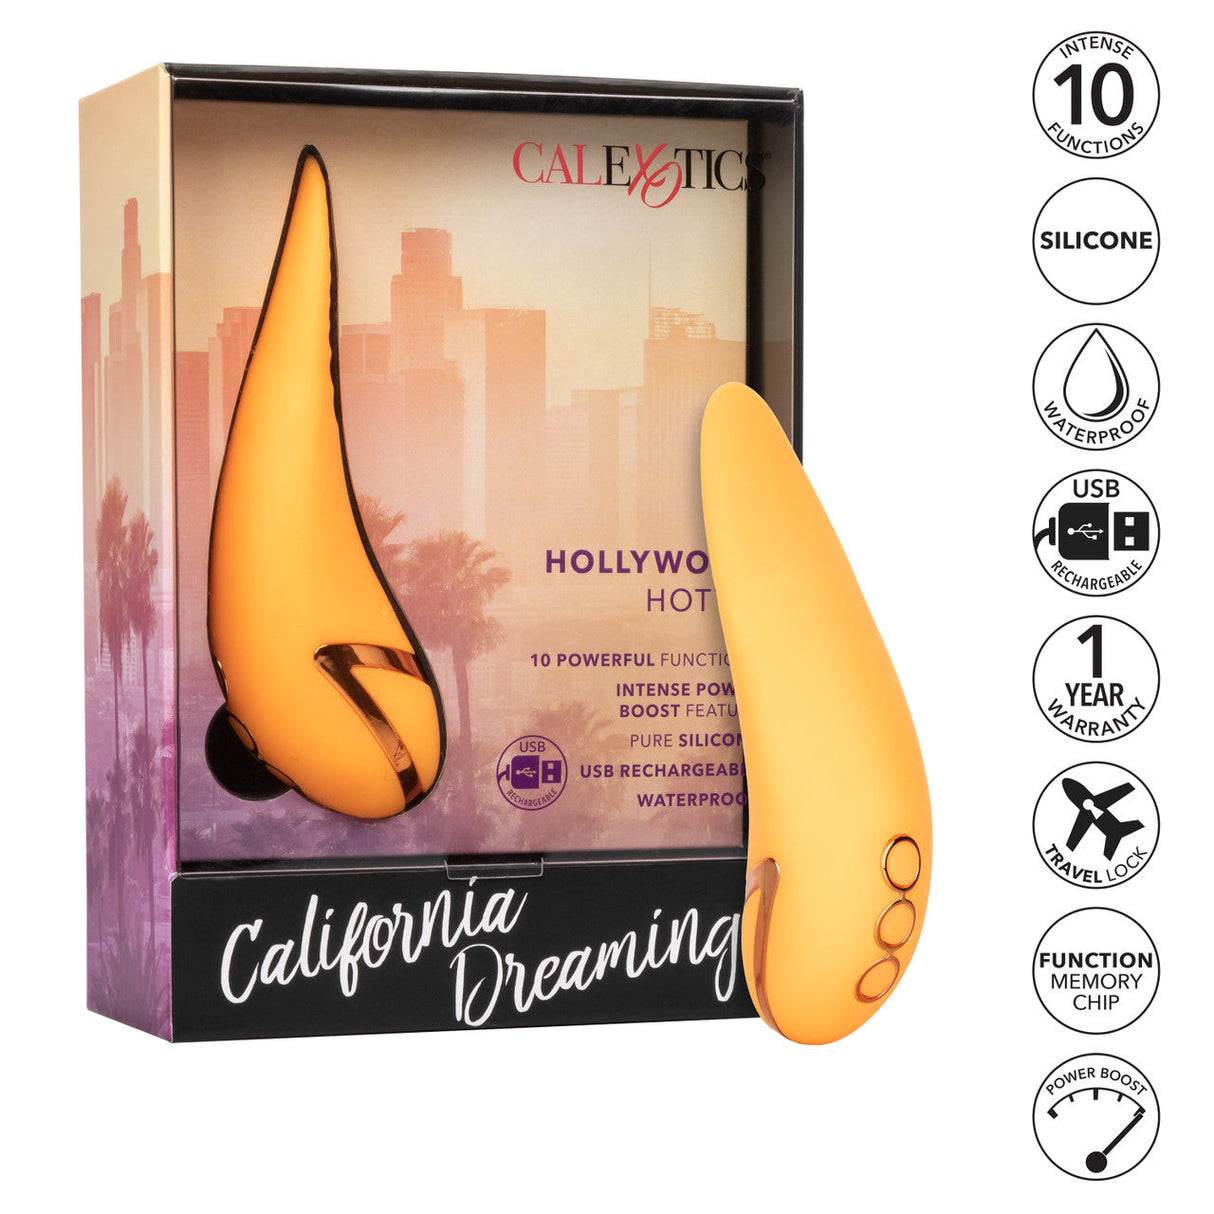 California Dreaming Hollywood Hottie Intimate Stimulator